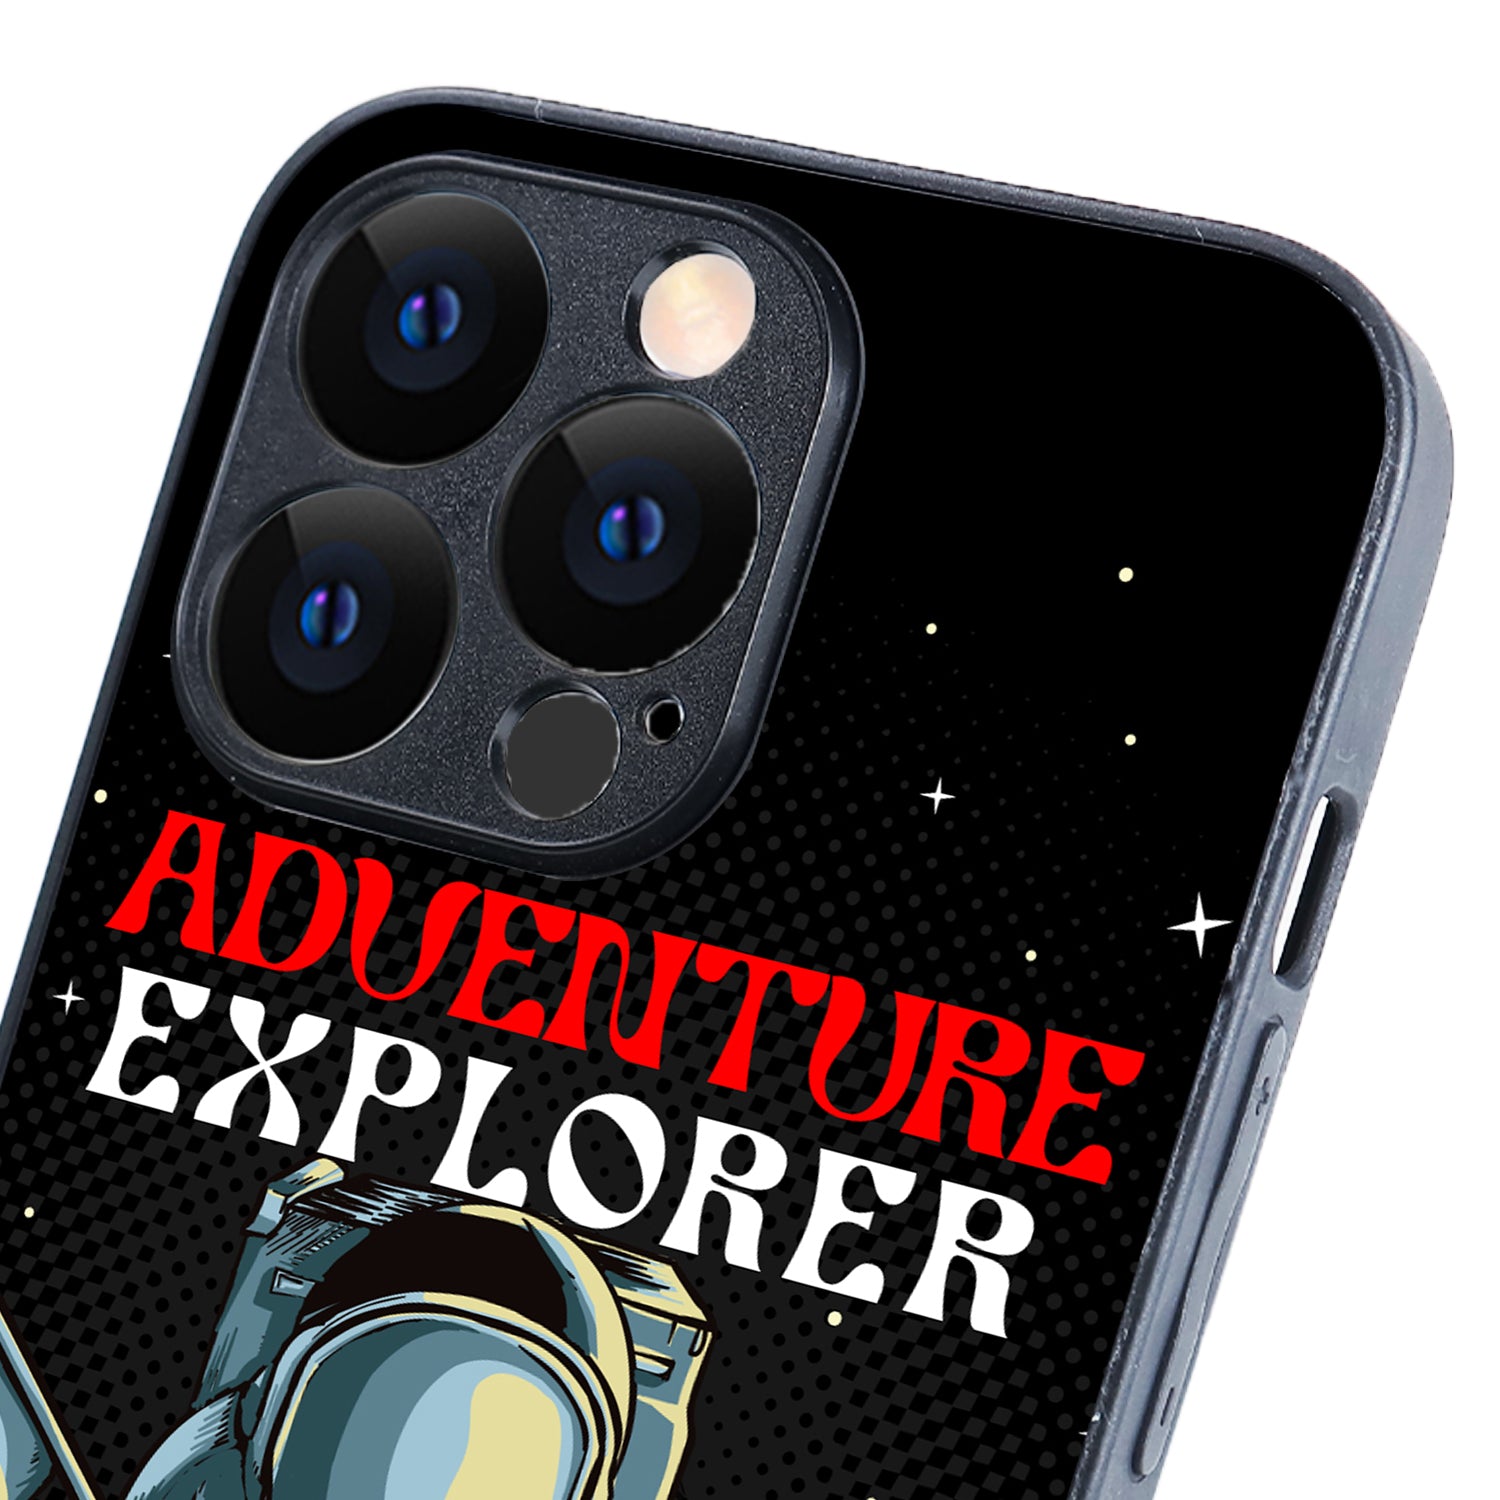 Adventure Explorer Space iPhone 13 Pro Case